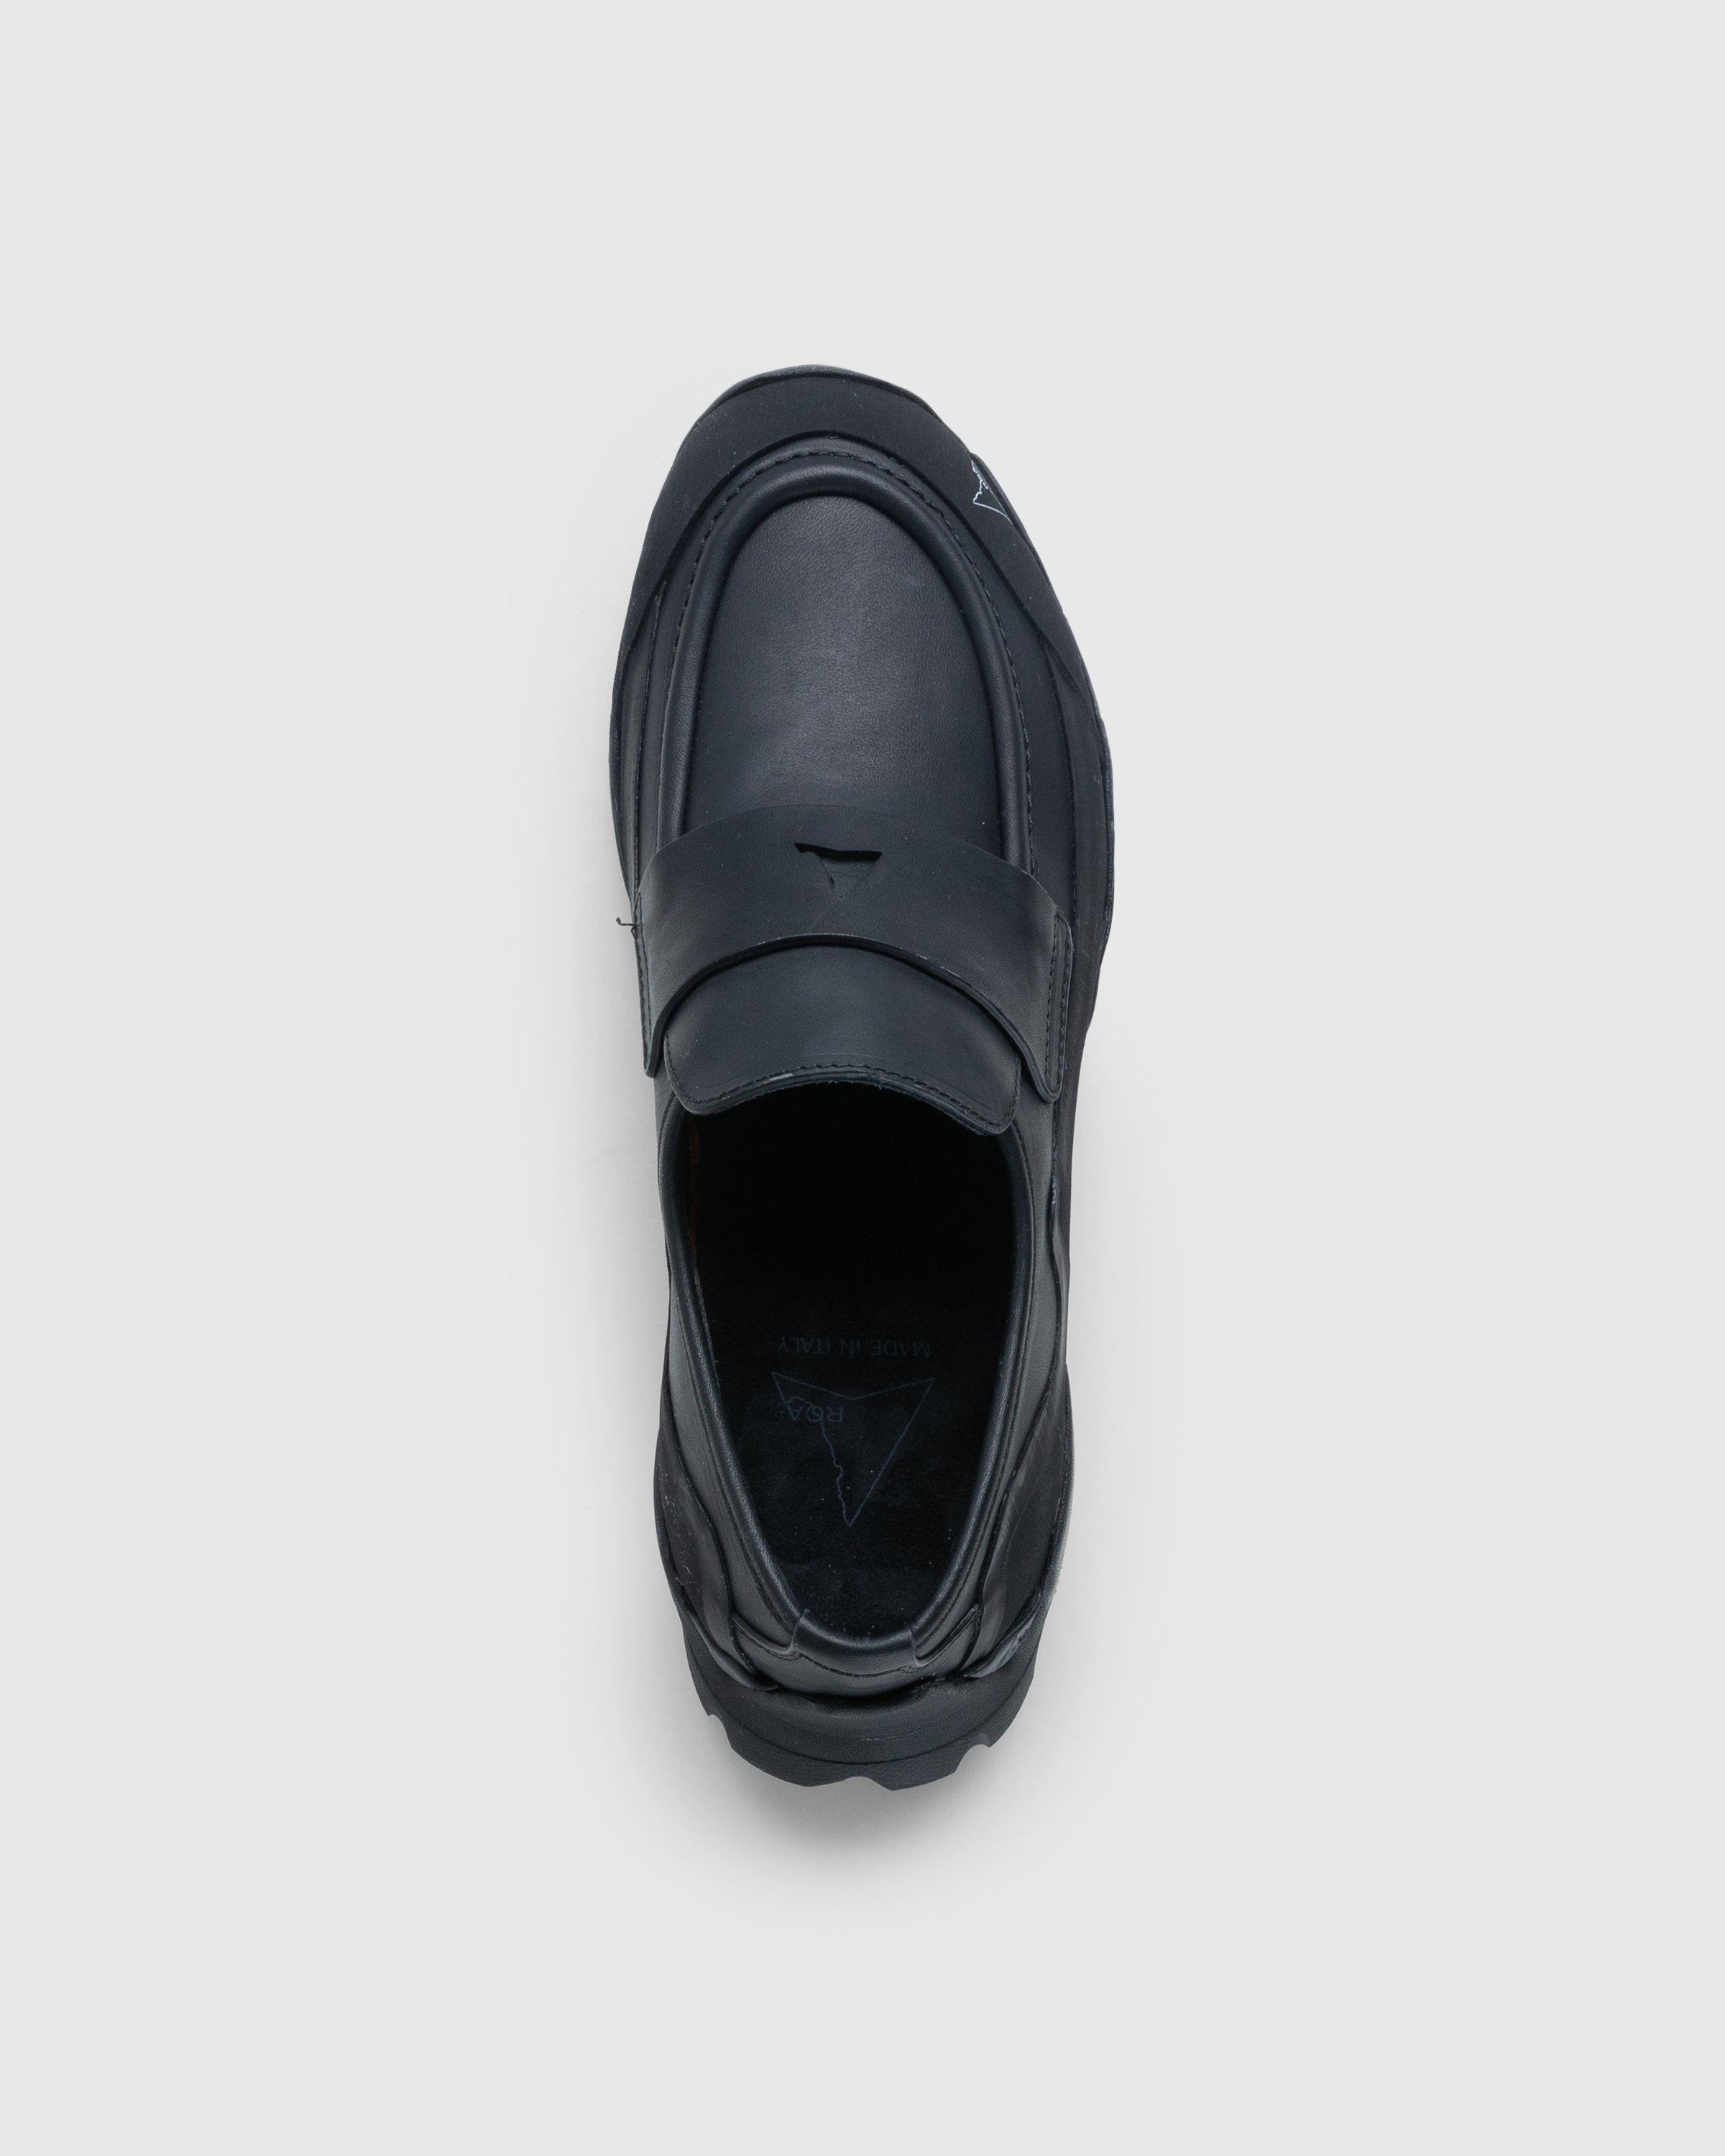 ROA – Leather Loafer Black | Highsnobiety Shop